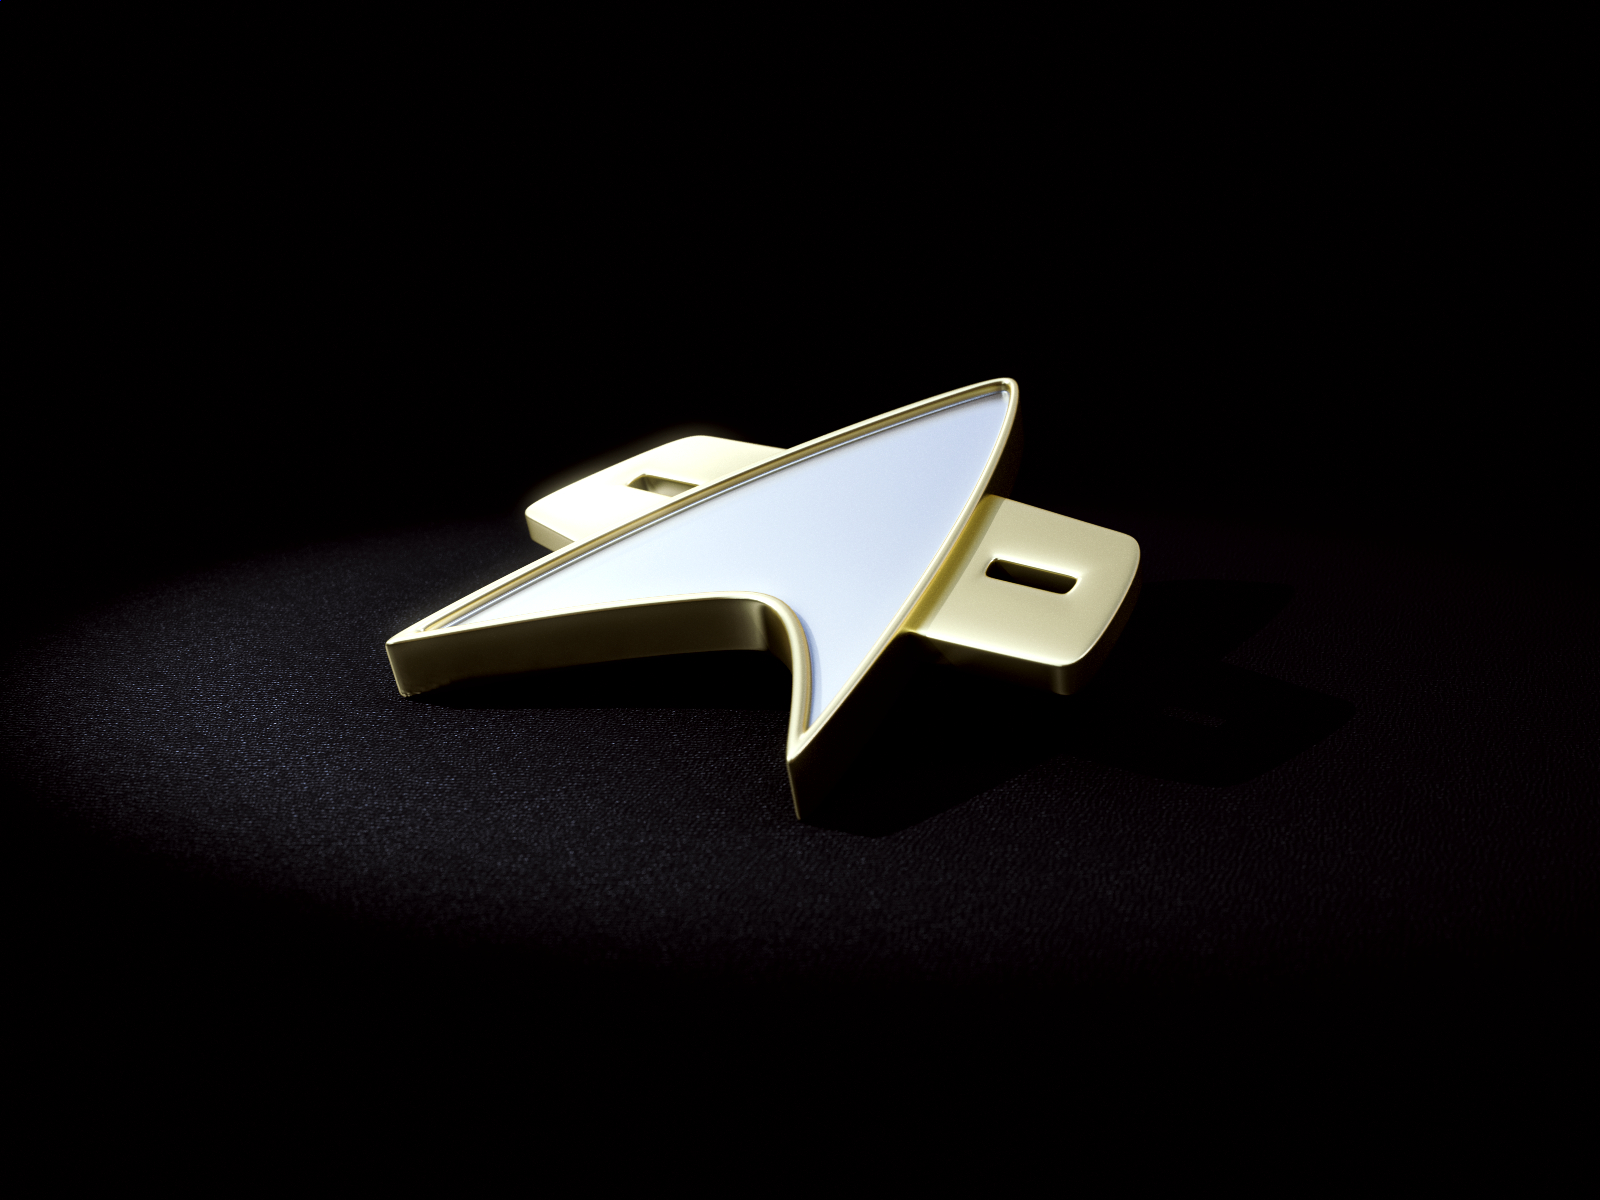 Wallpaper Star Trek - Star Trek Badge Iphone , HD Wallpaper & Backgrounds